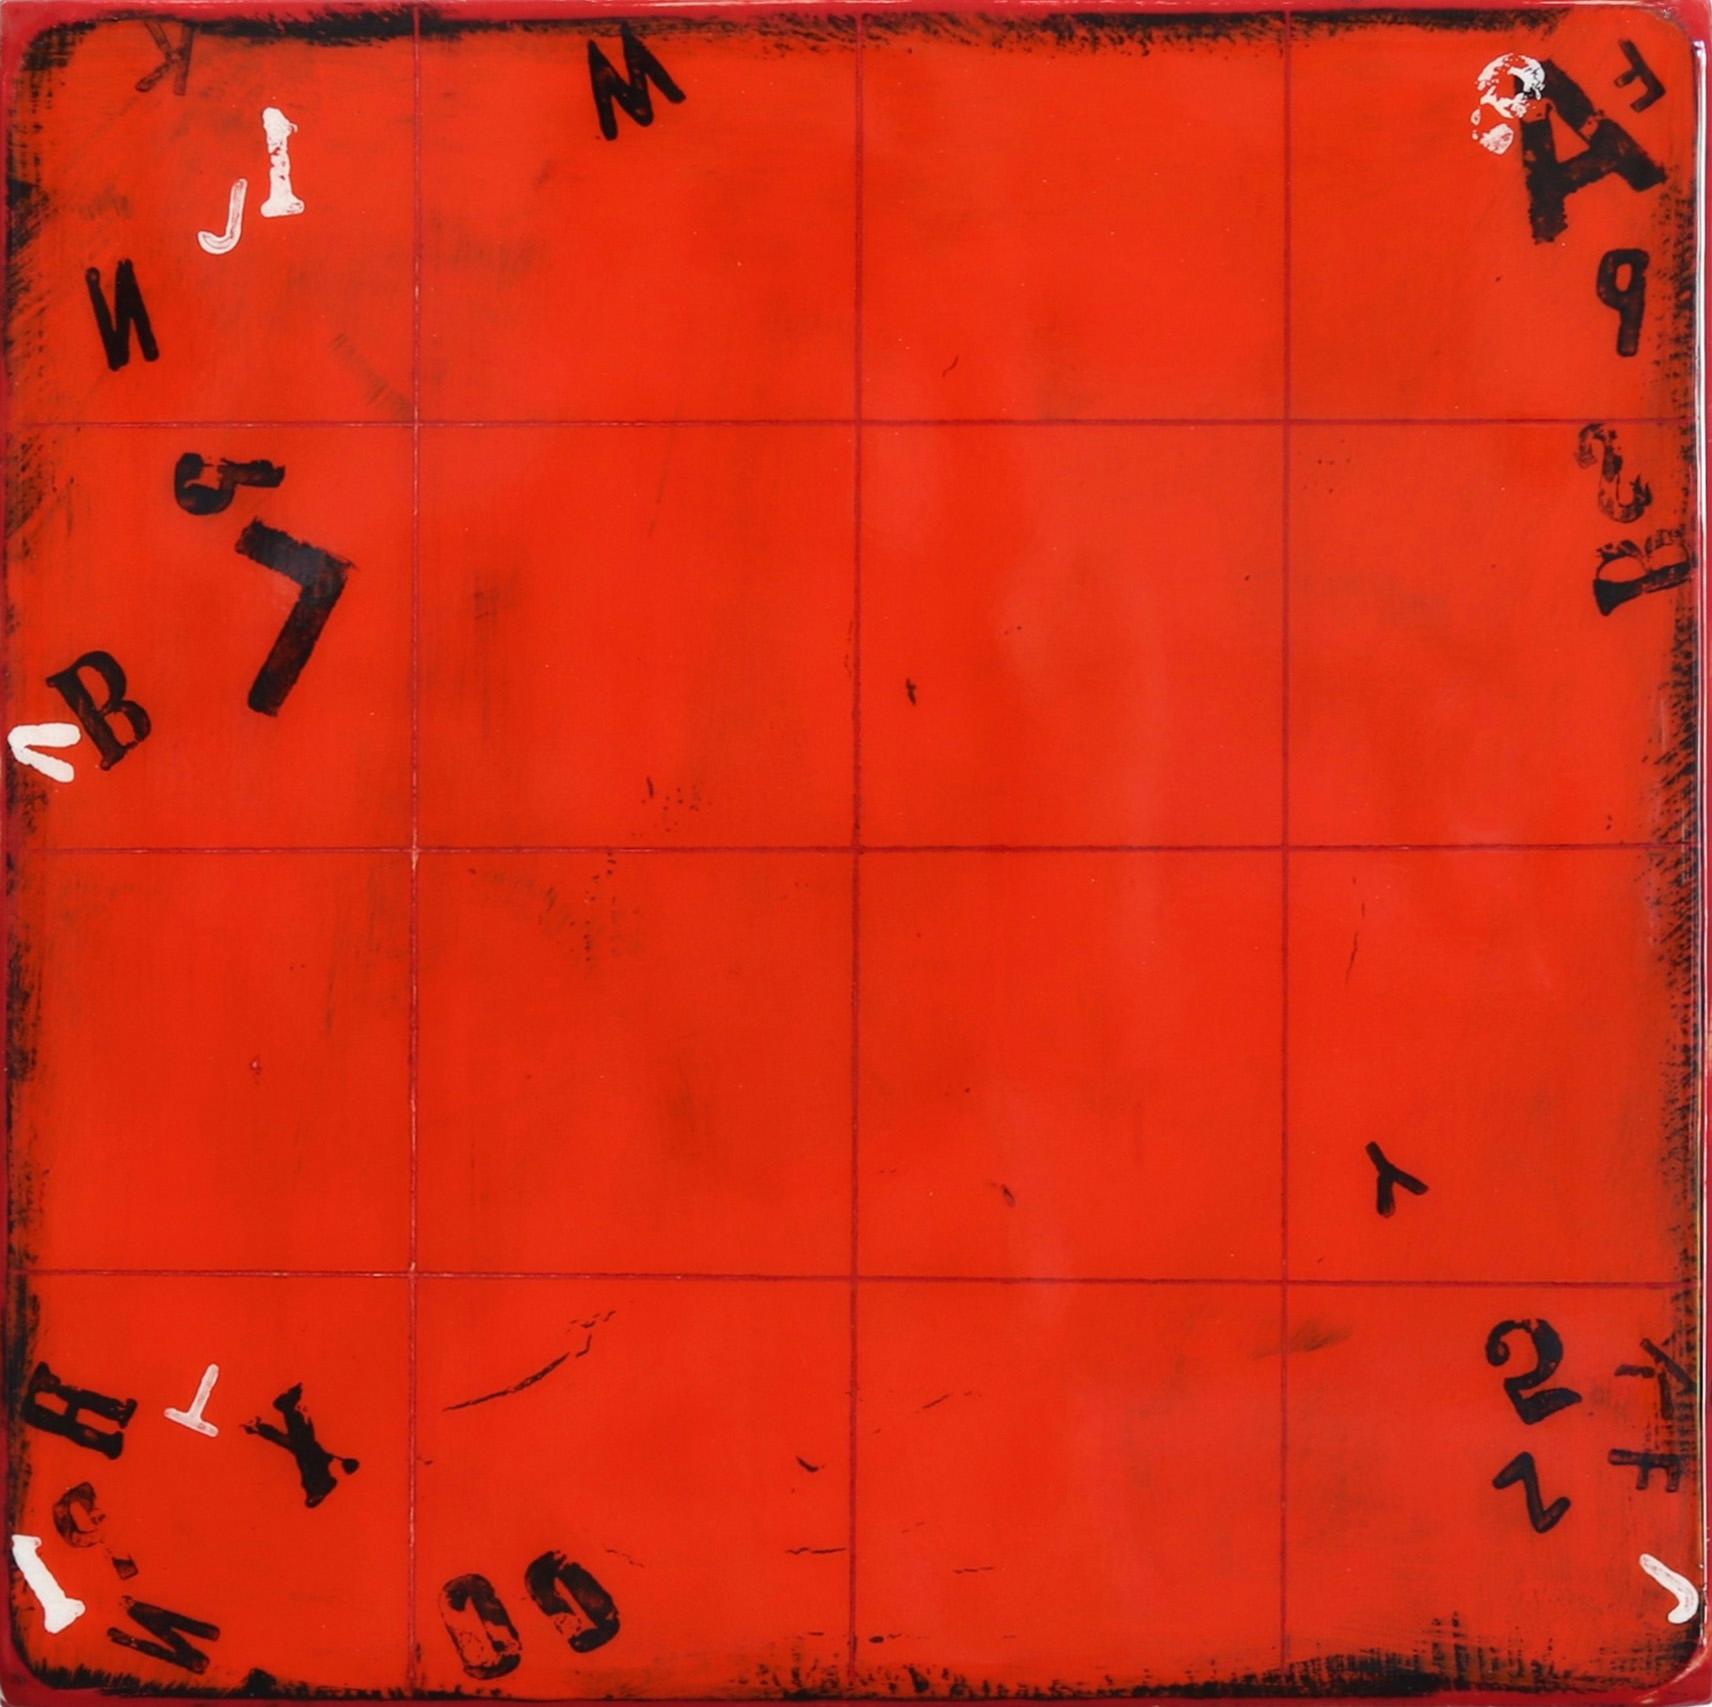 Abstract Painting Ricky Hunt - Alphabet Soup 5 - œuvre d'art moderne minimaliste en résine